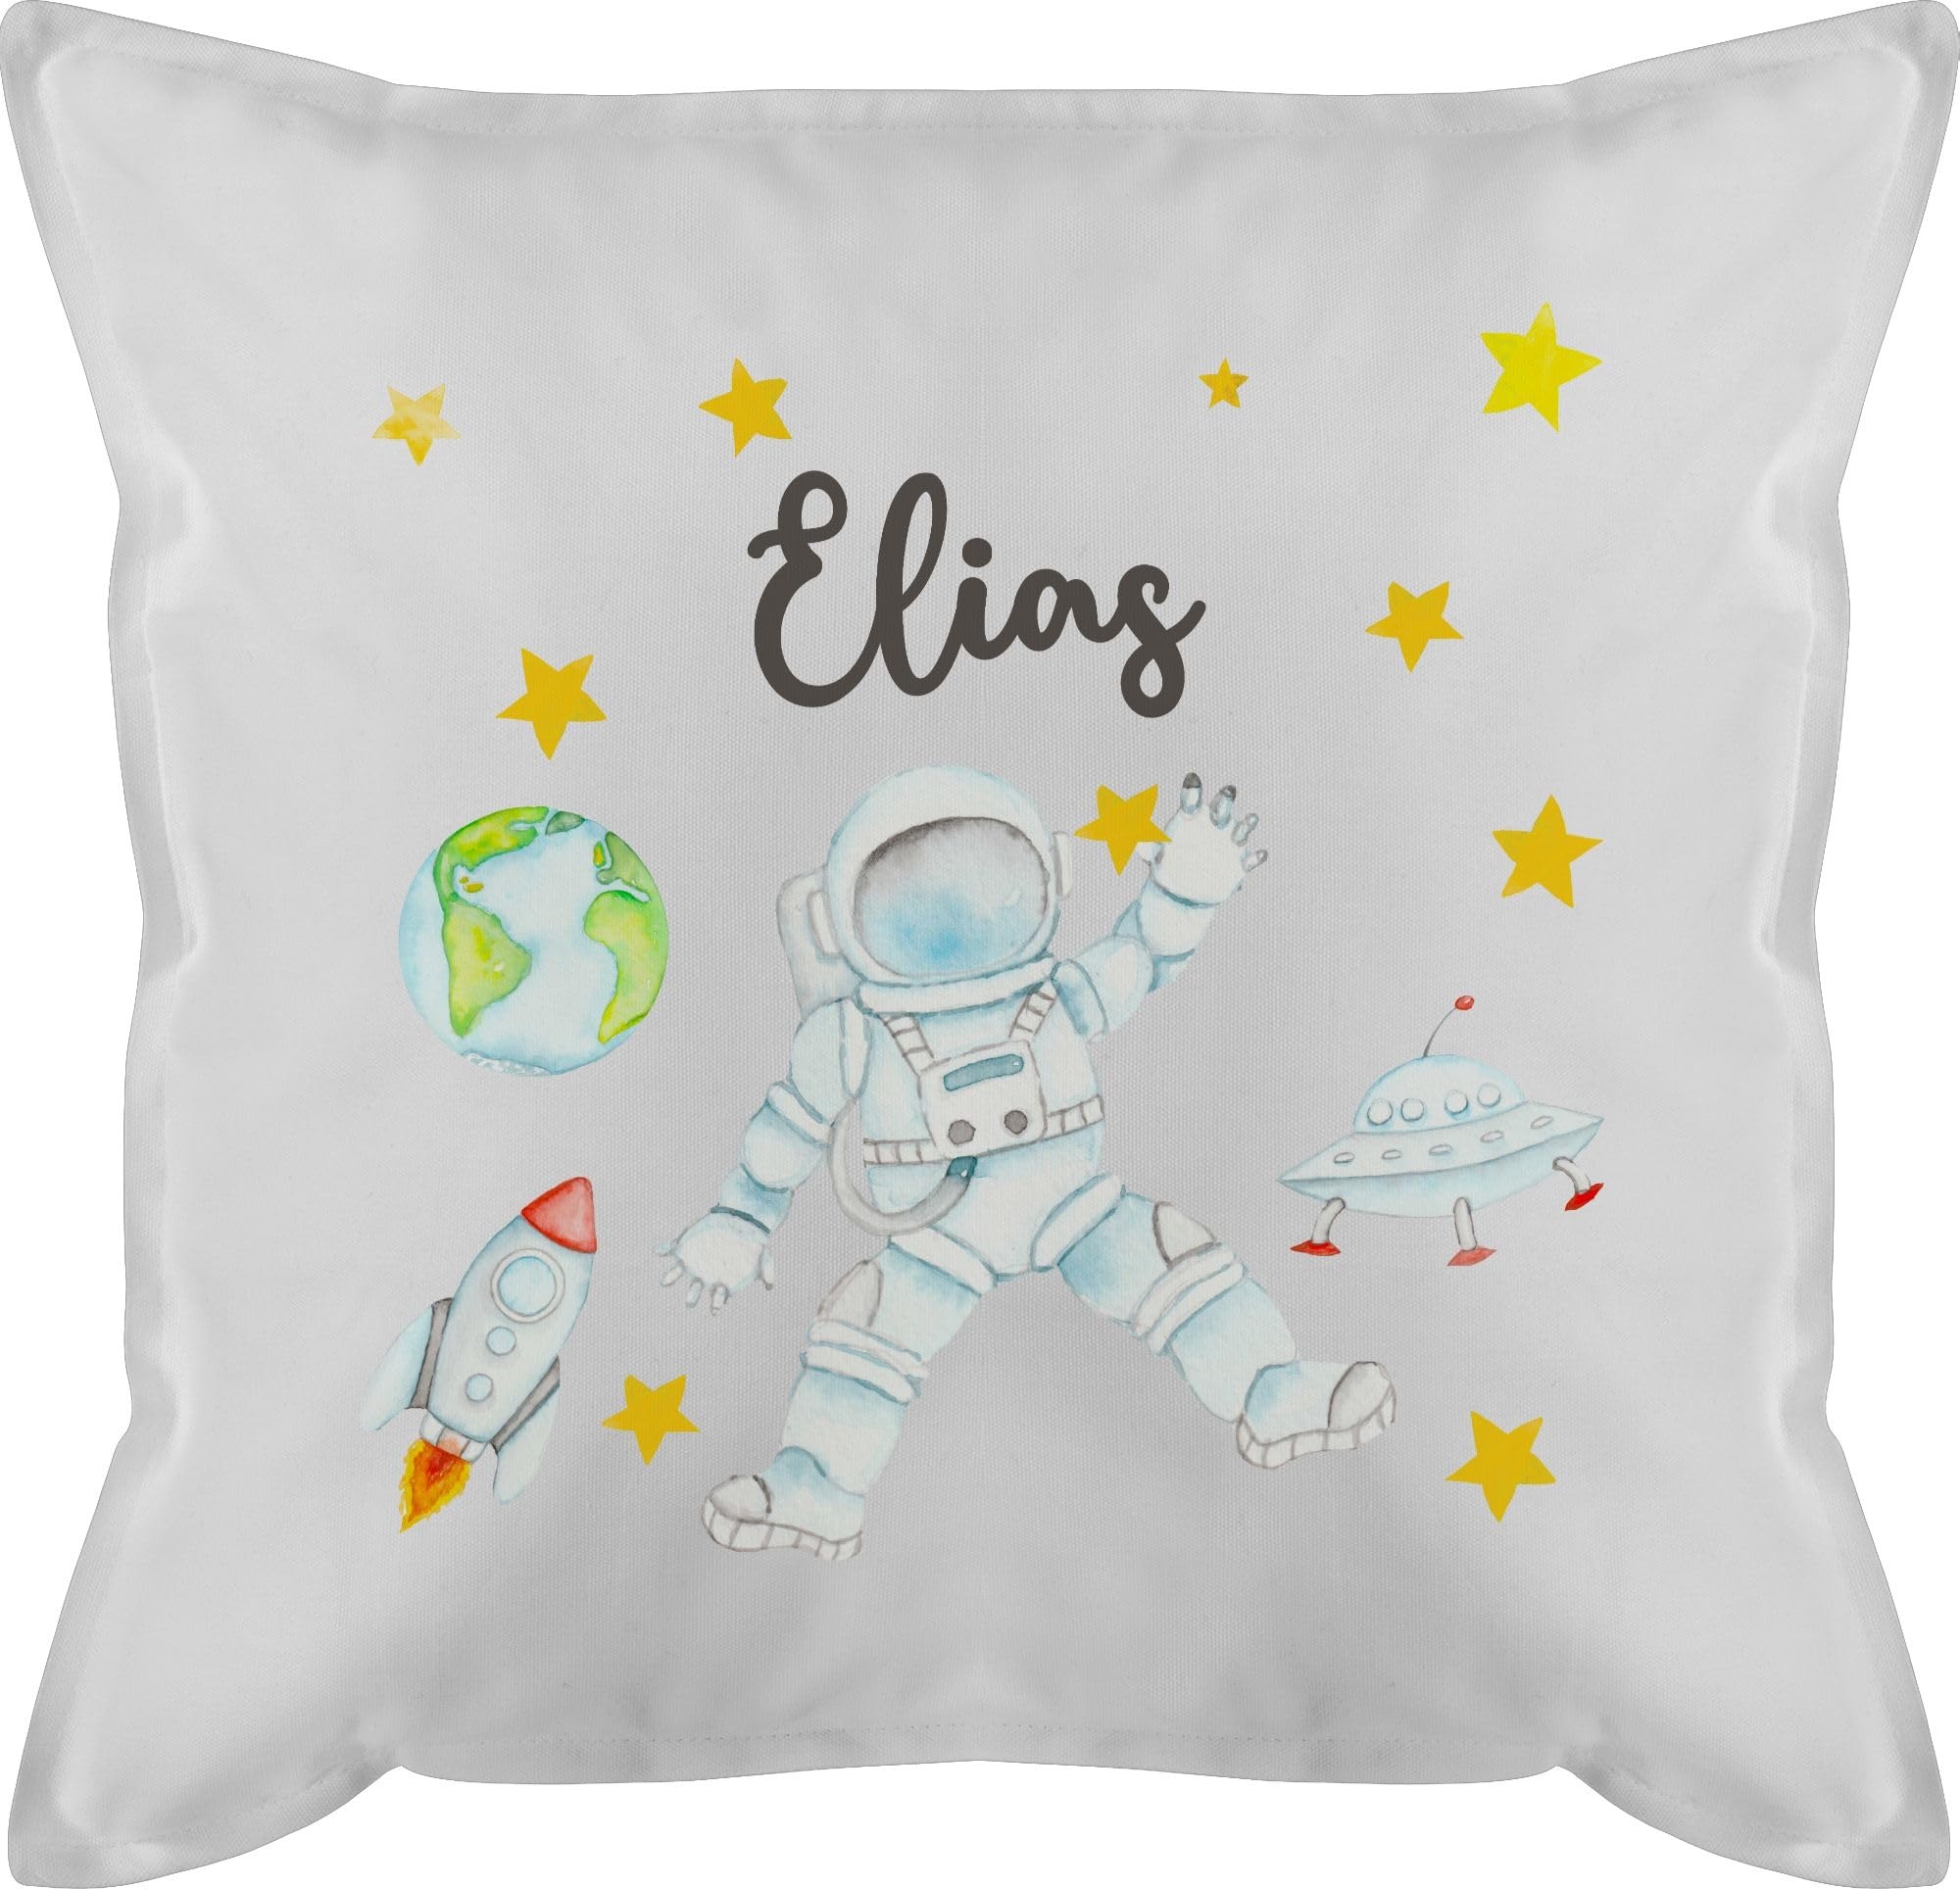 50x50 - Weltall - Astronaut Kinder Raumfahrt Weltraum Planet Geschenk - 50 x 50 cm - Weiß - Planeten Name NASA Rakete Astronauten